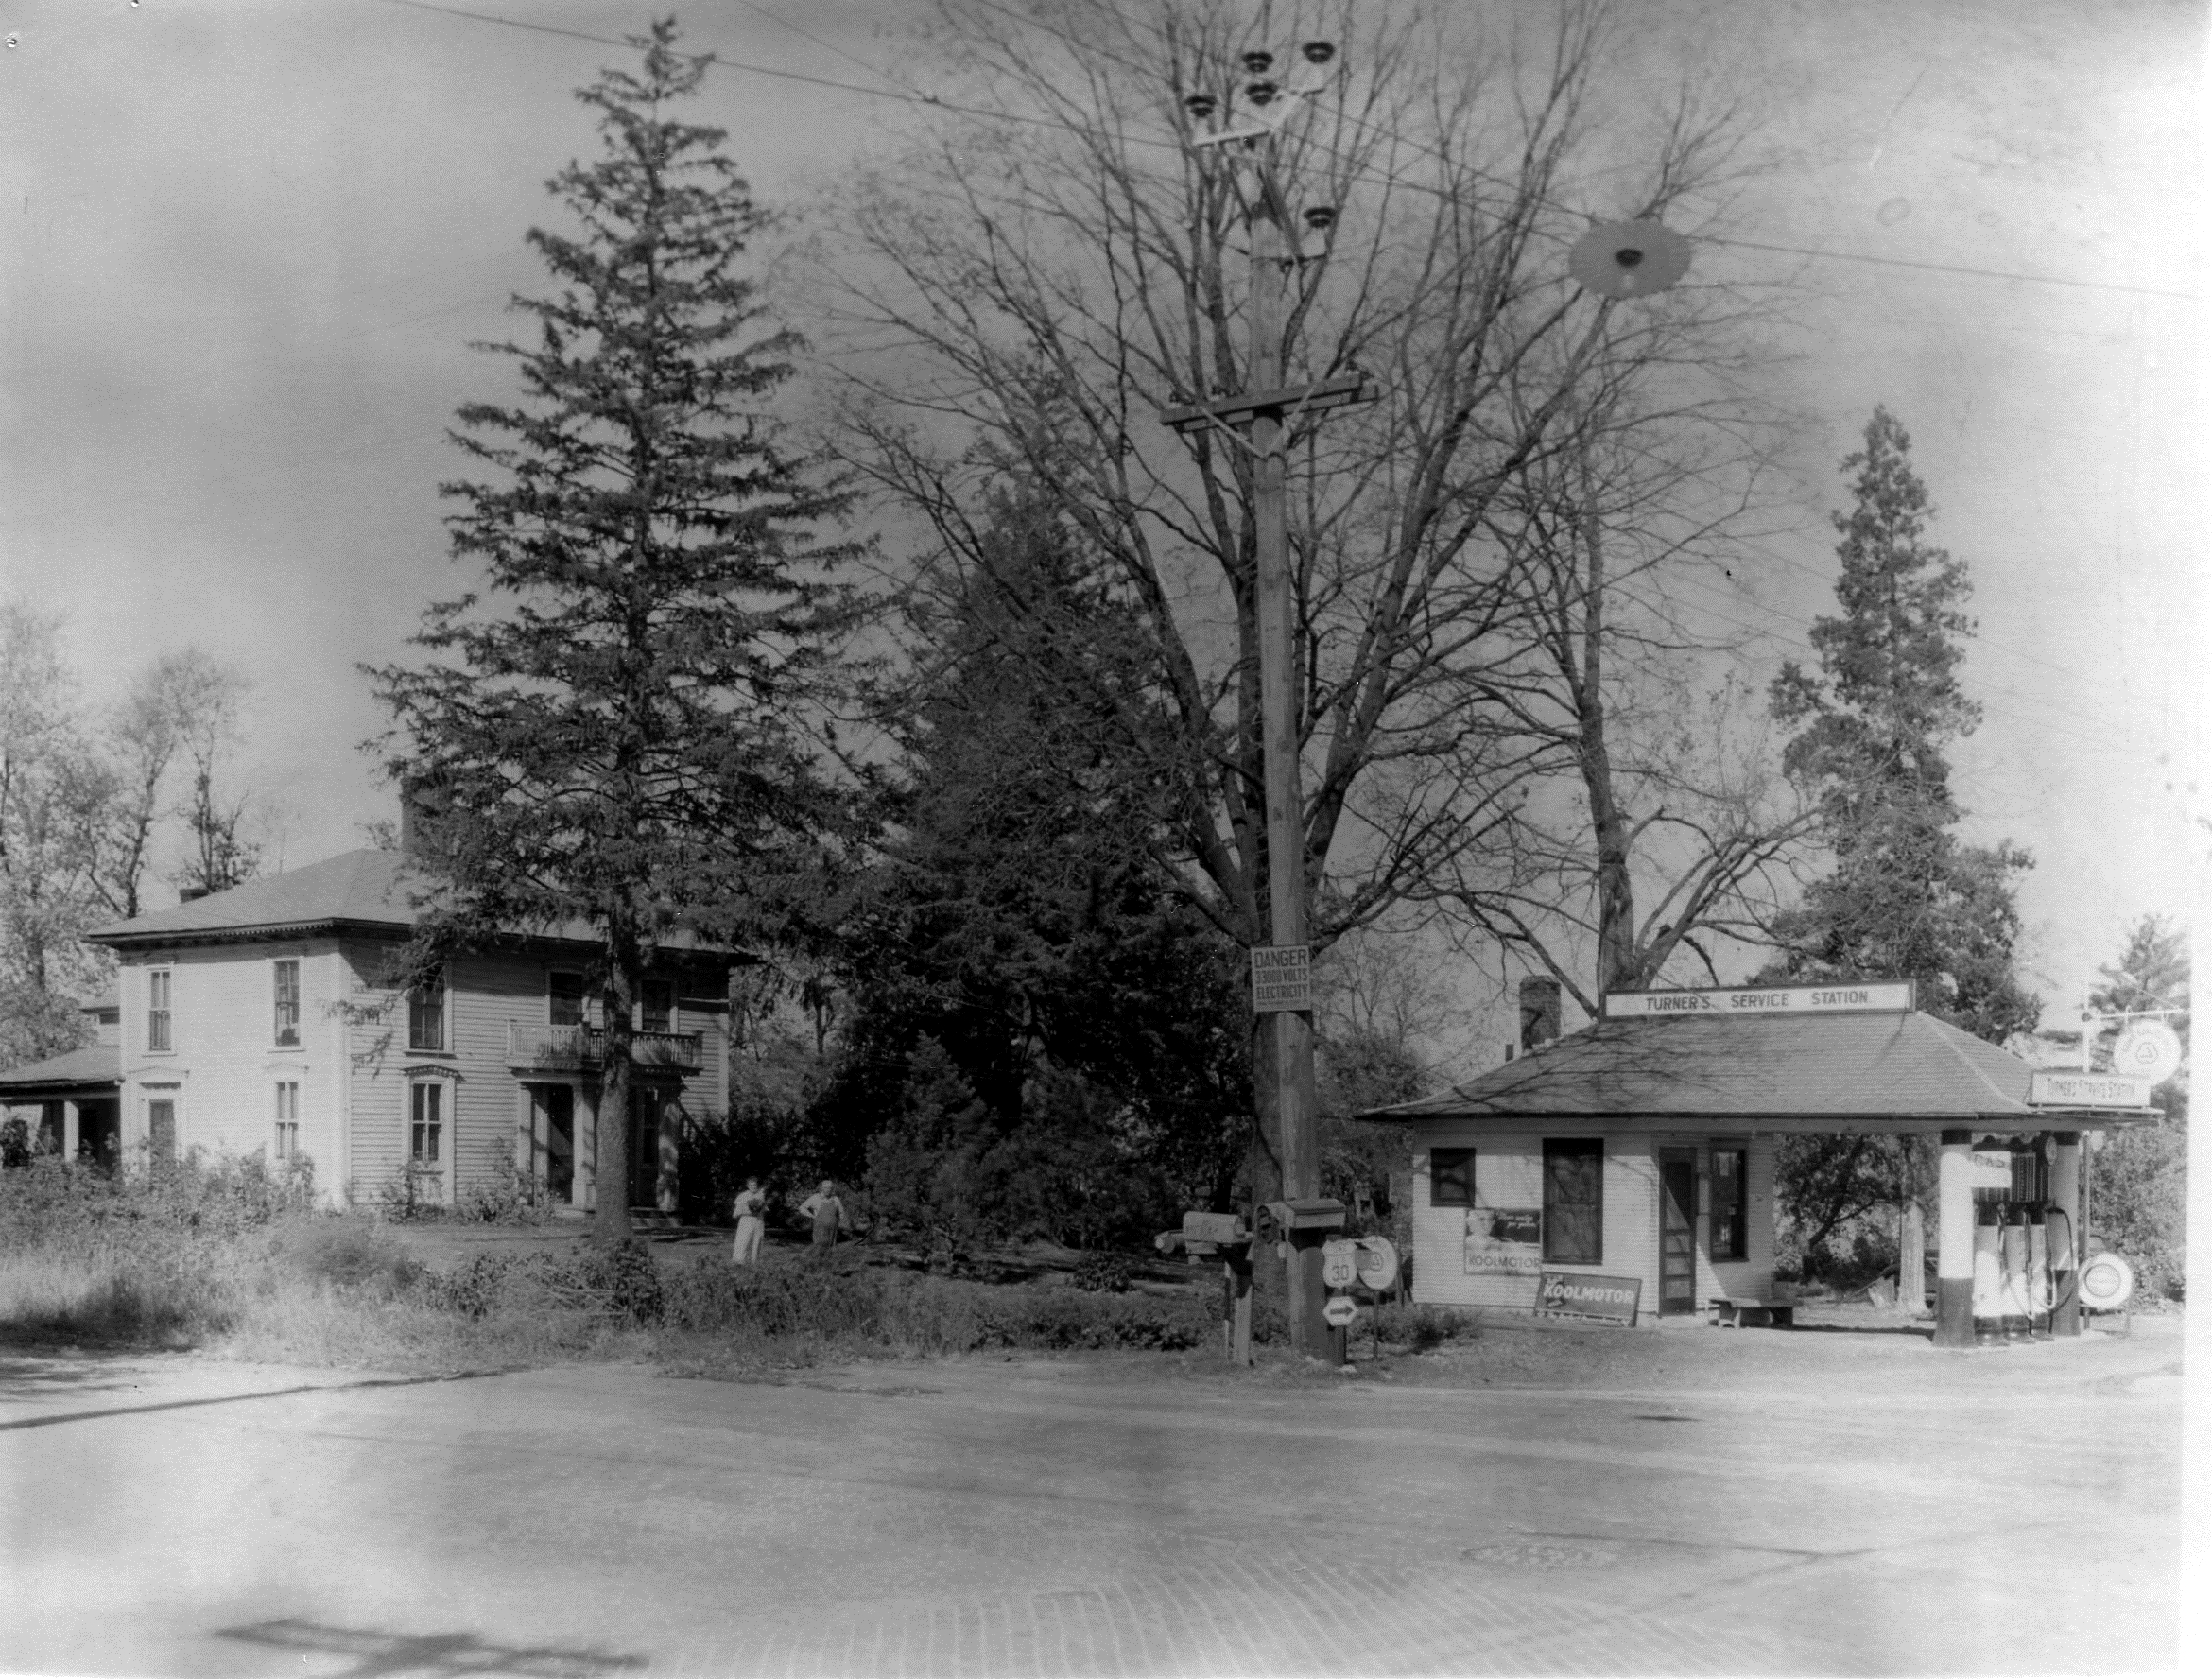 photo of Turner's Service Station